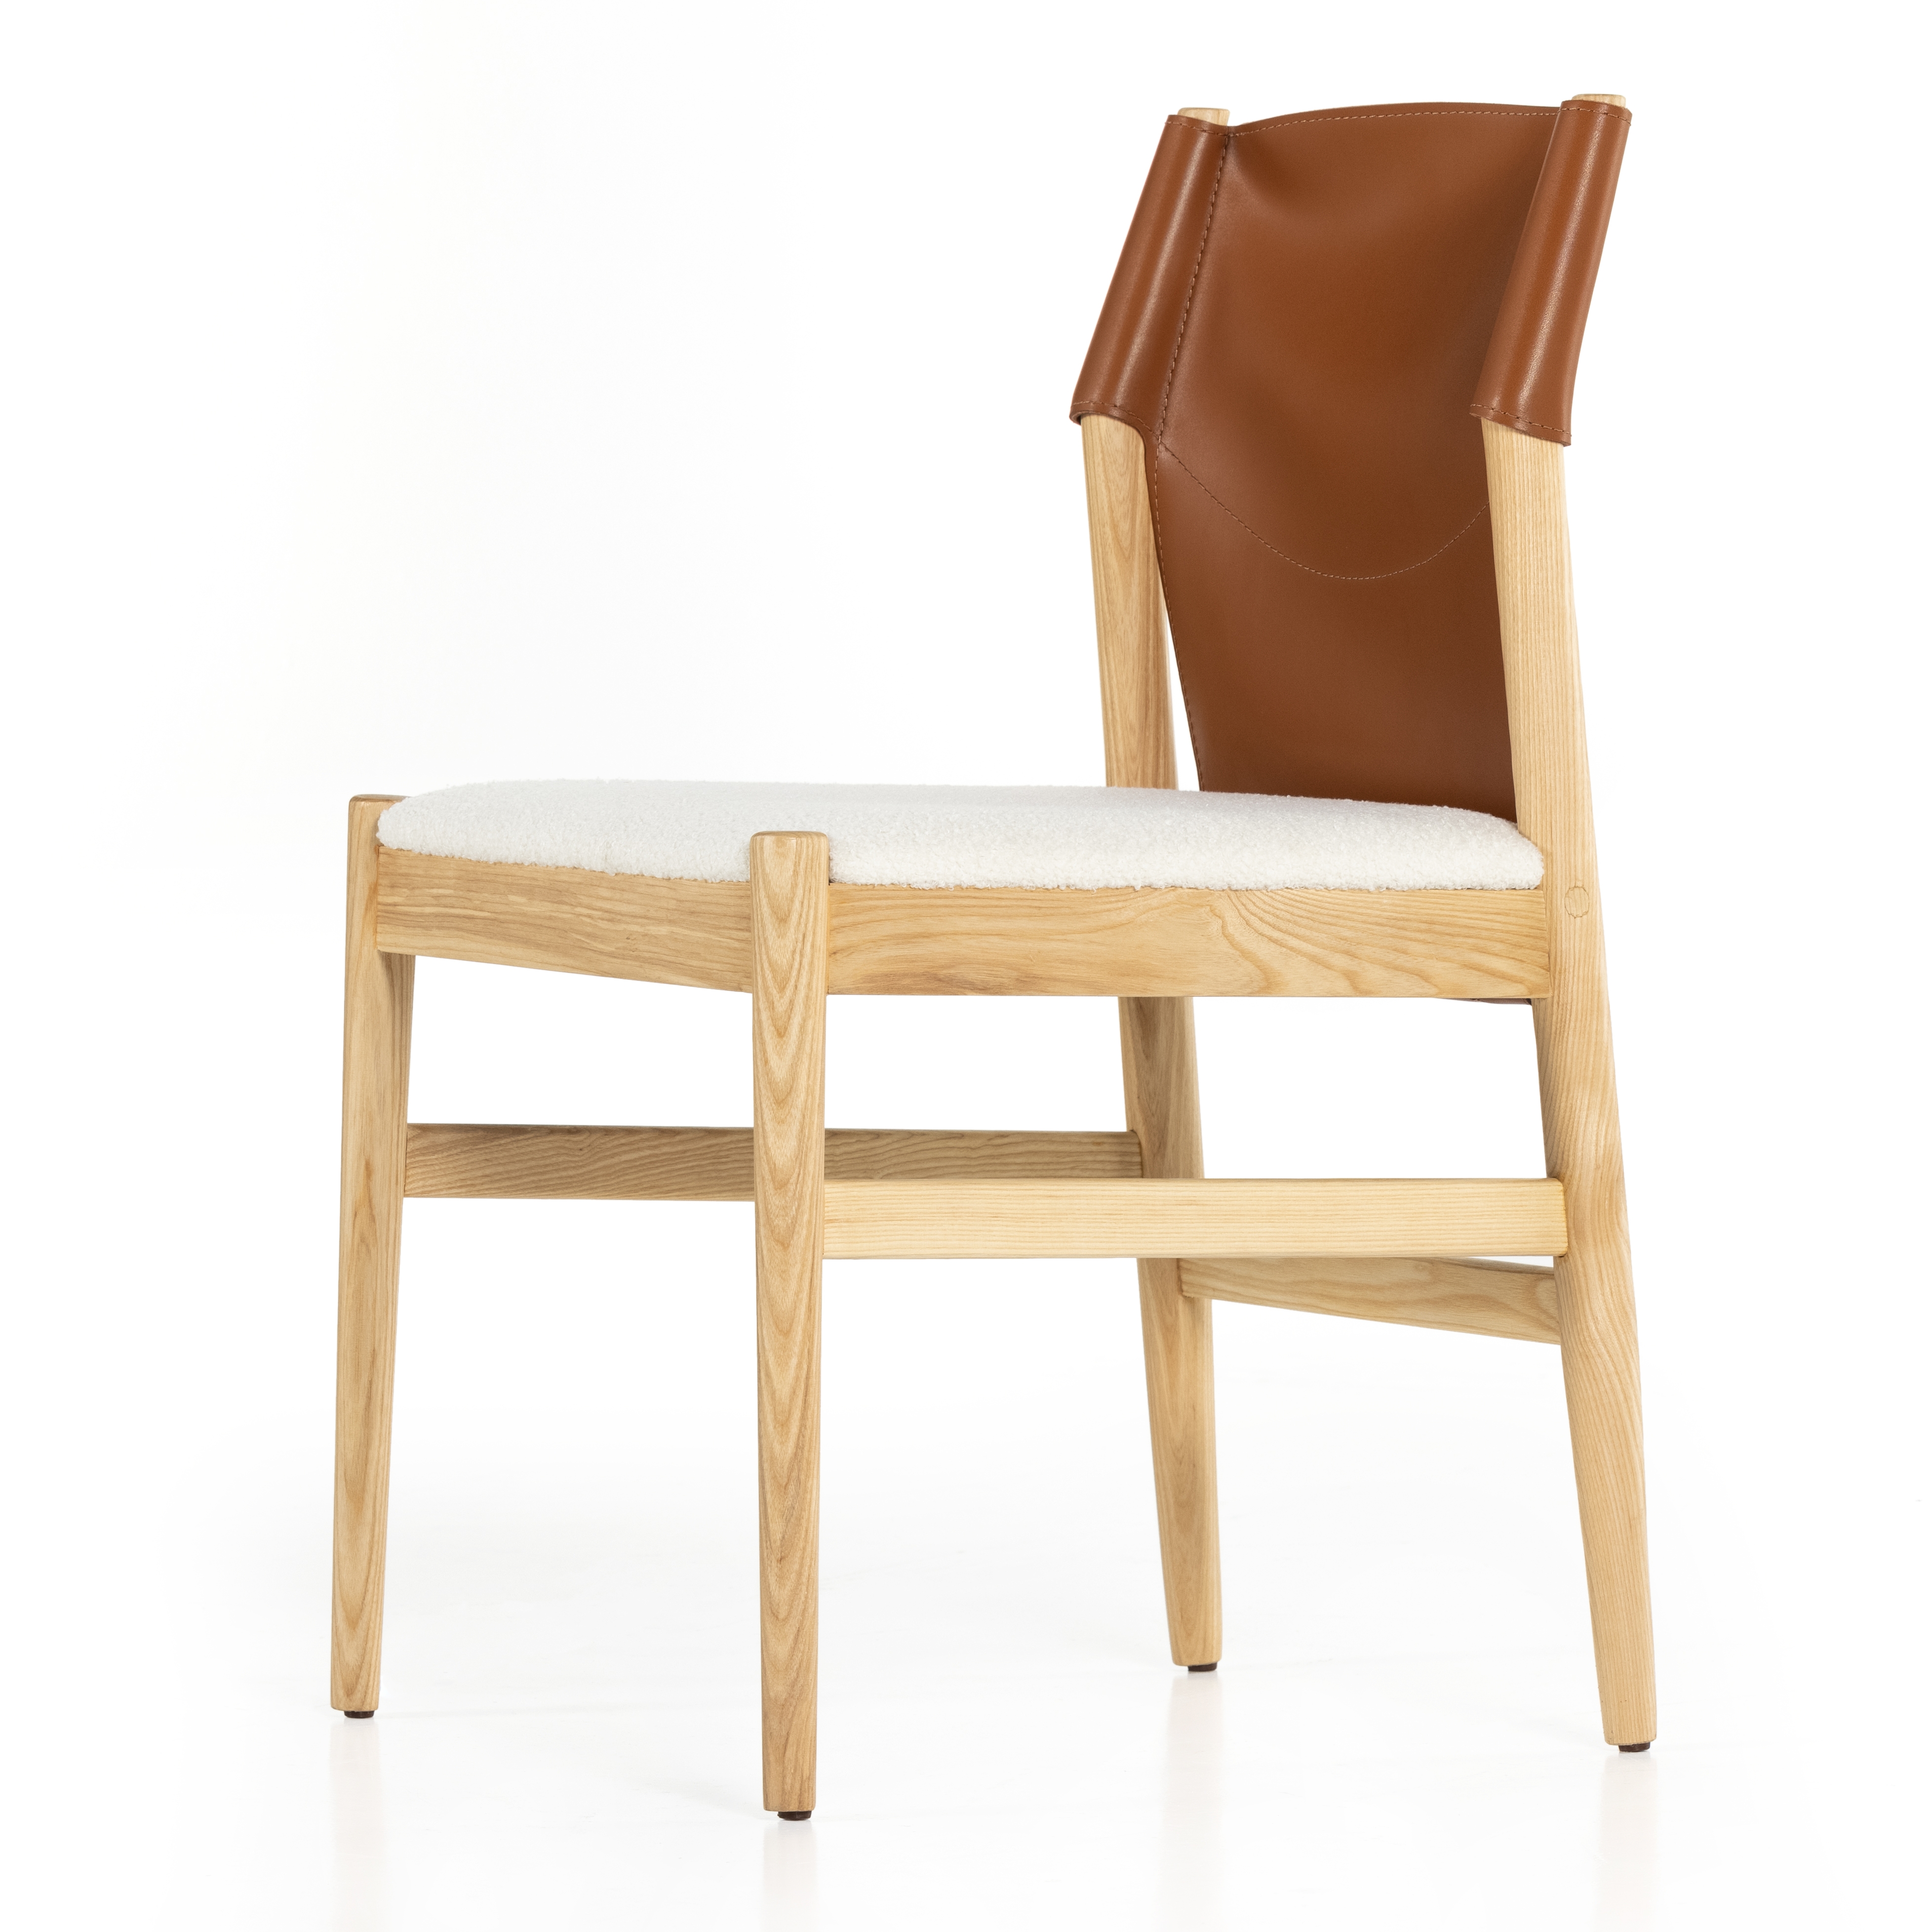 Lulu Armless Dining Chair-Saddle Leather - Image 2